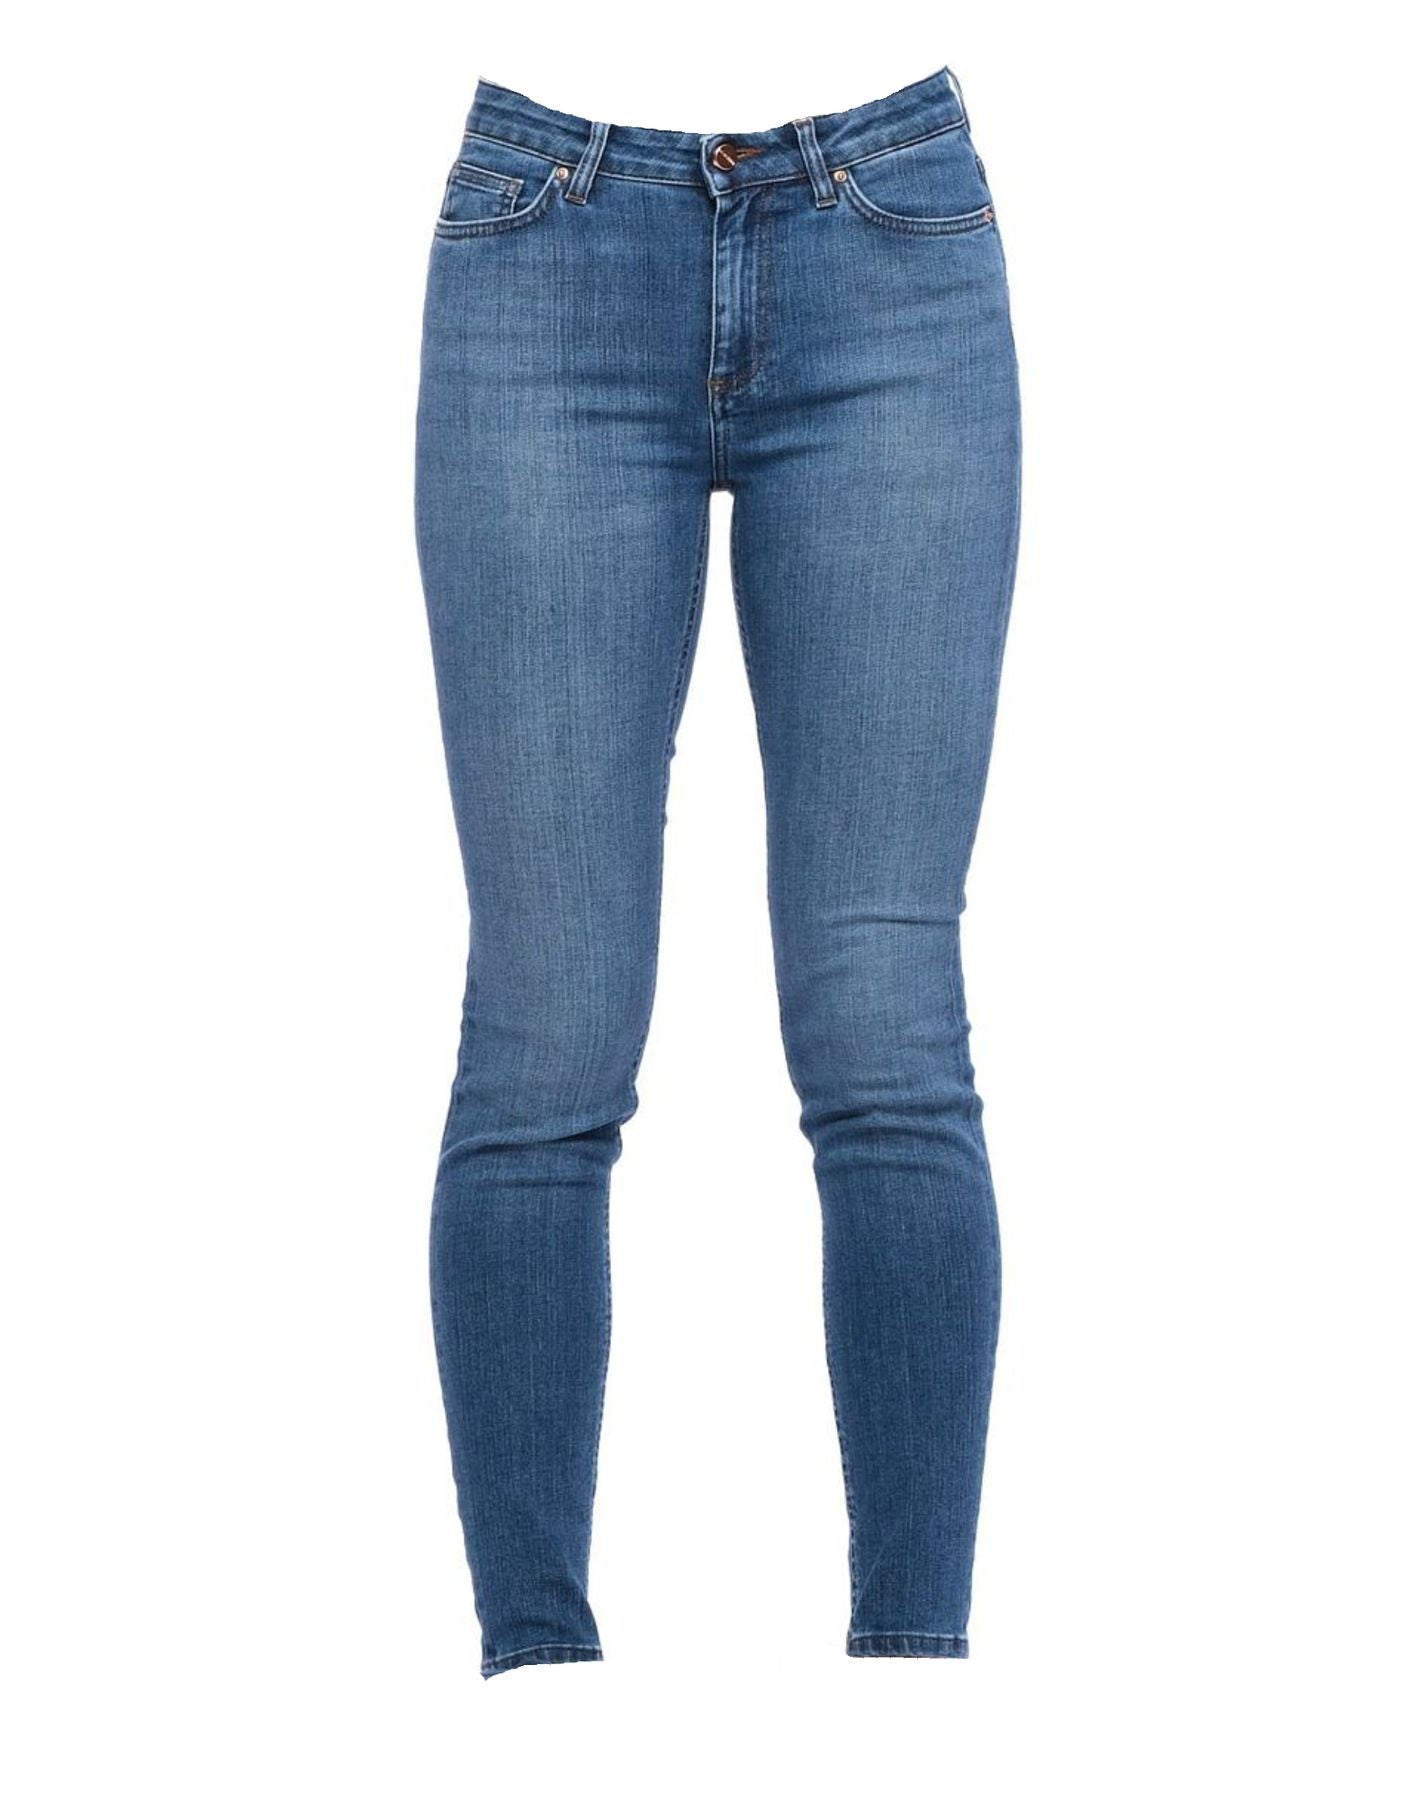 Jeans für Frauen DON THE FULLER CANNES DTF28B 902